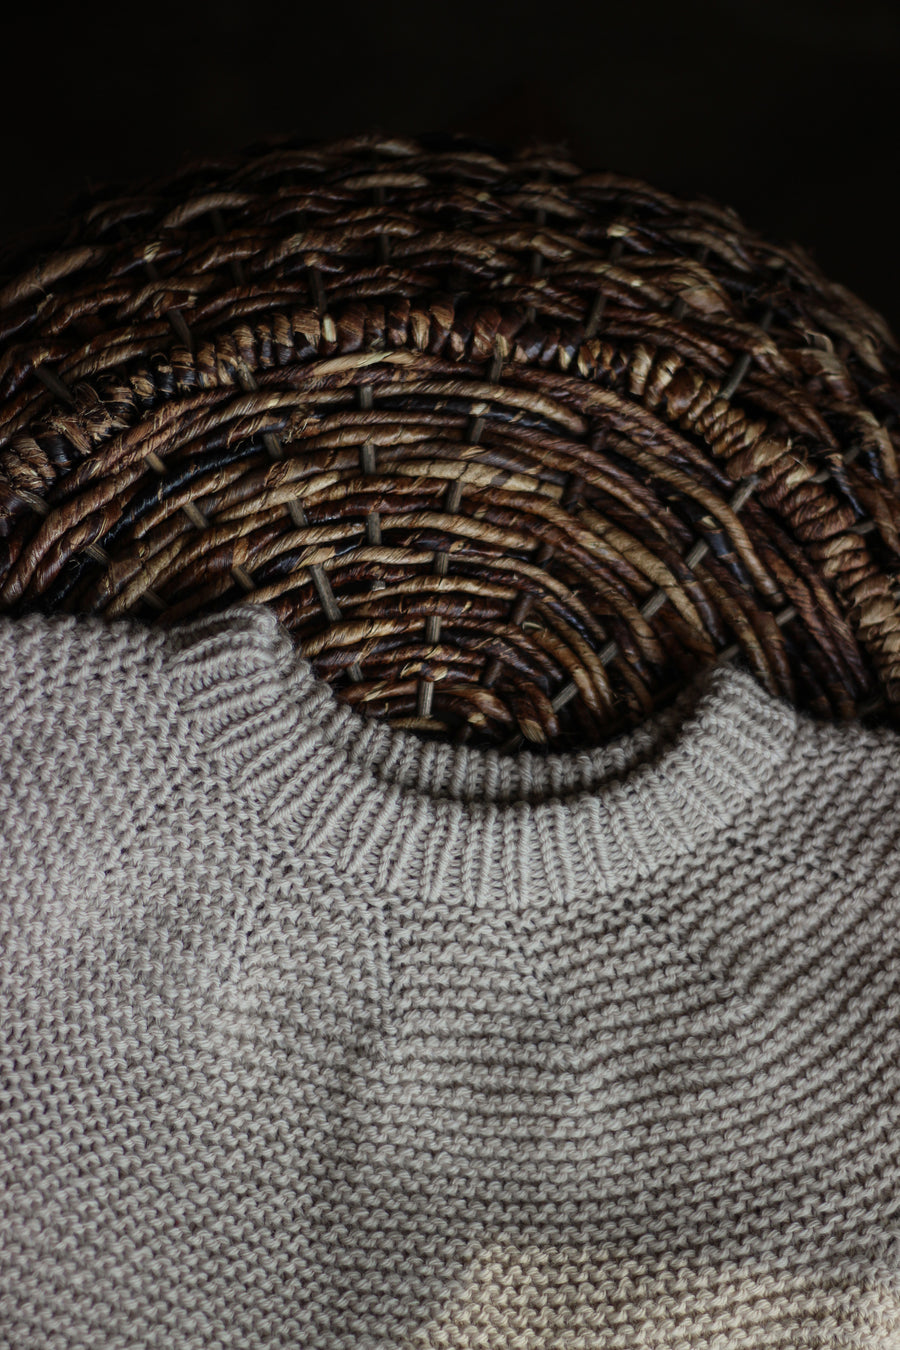 Garter Stitch Romper Knit Pattern